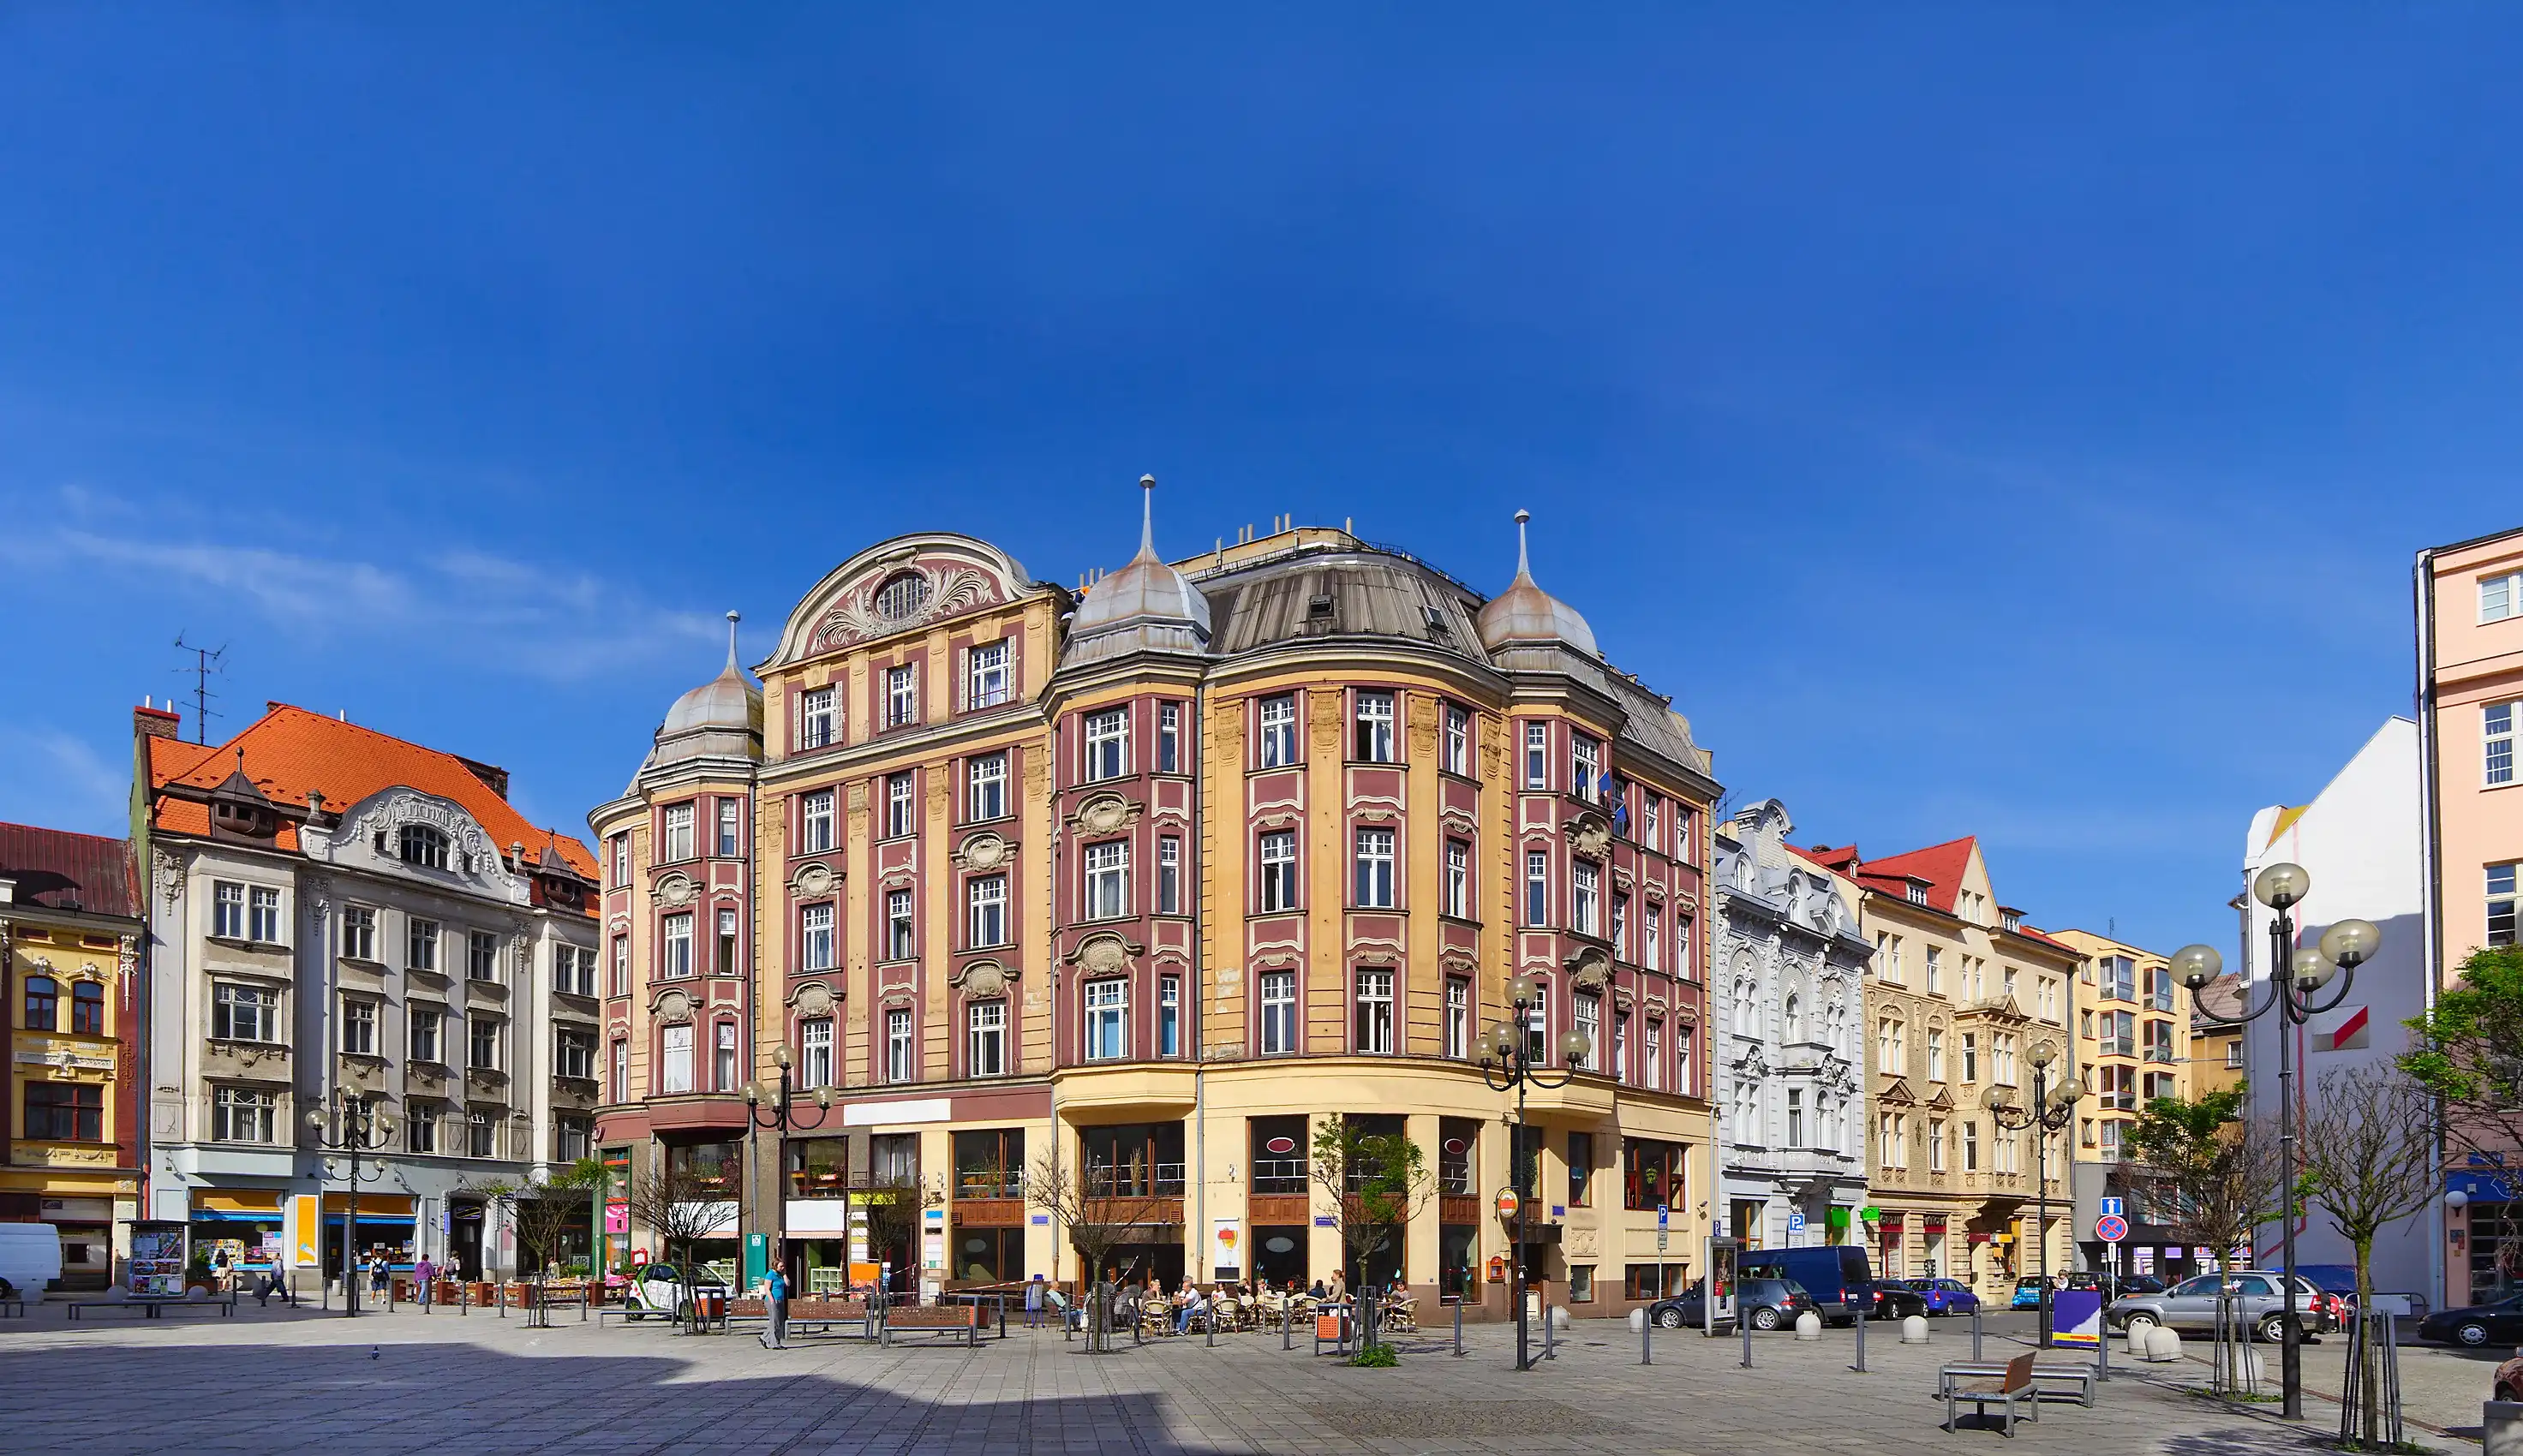 Best Ostrava hotels. Cheap hotels in Ostrava, Czech Republic